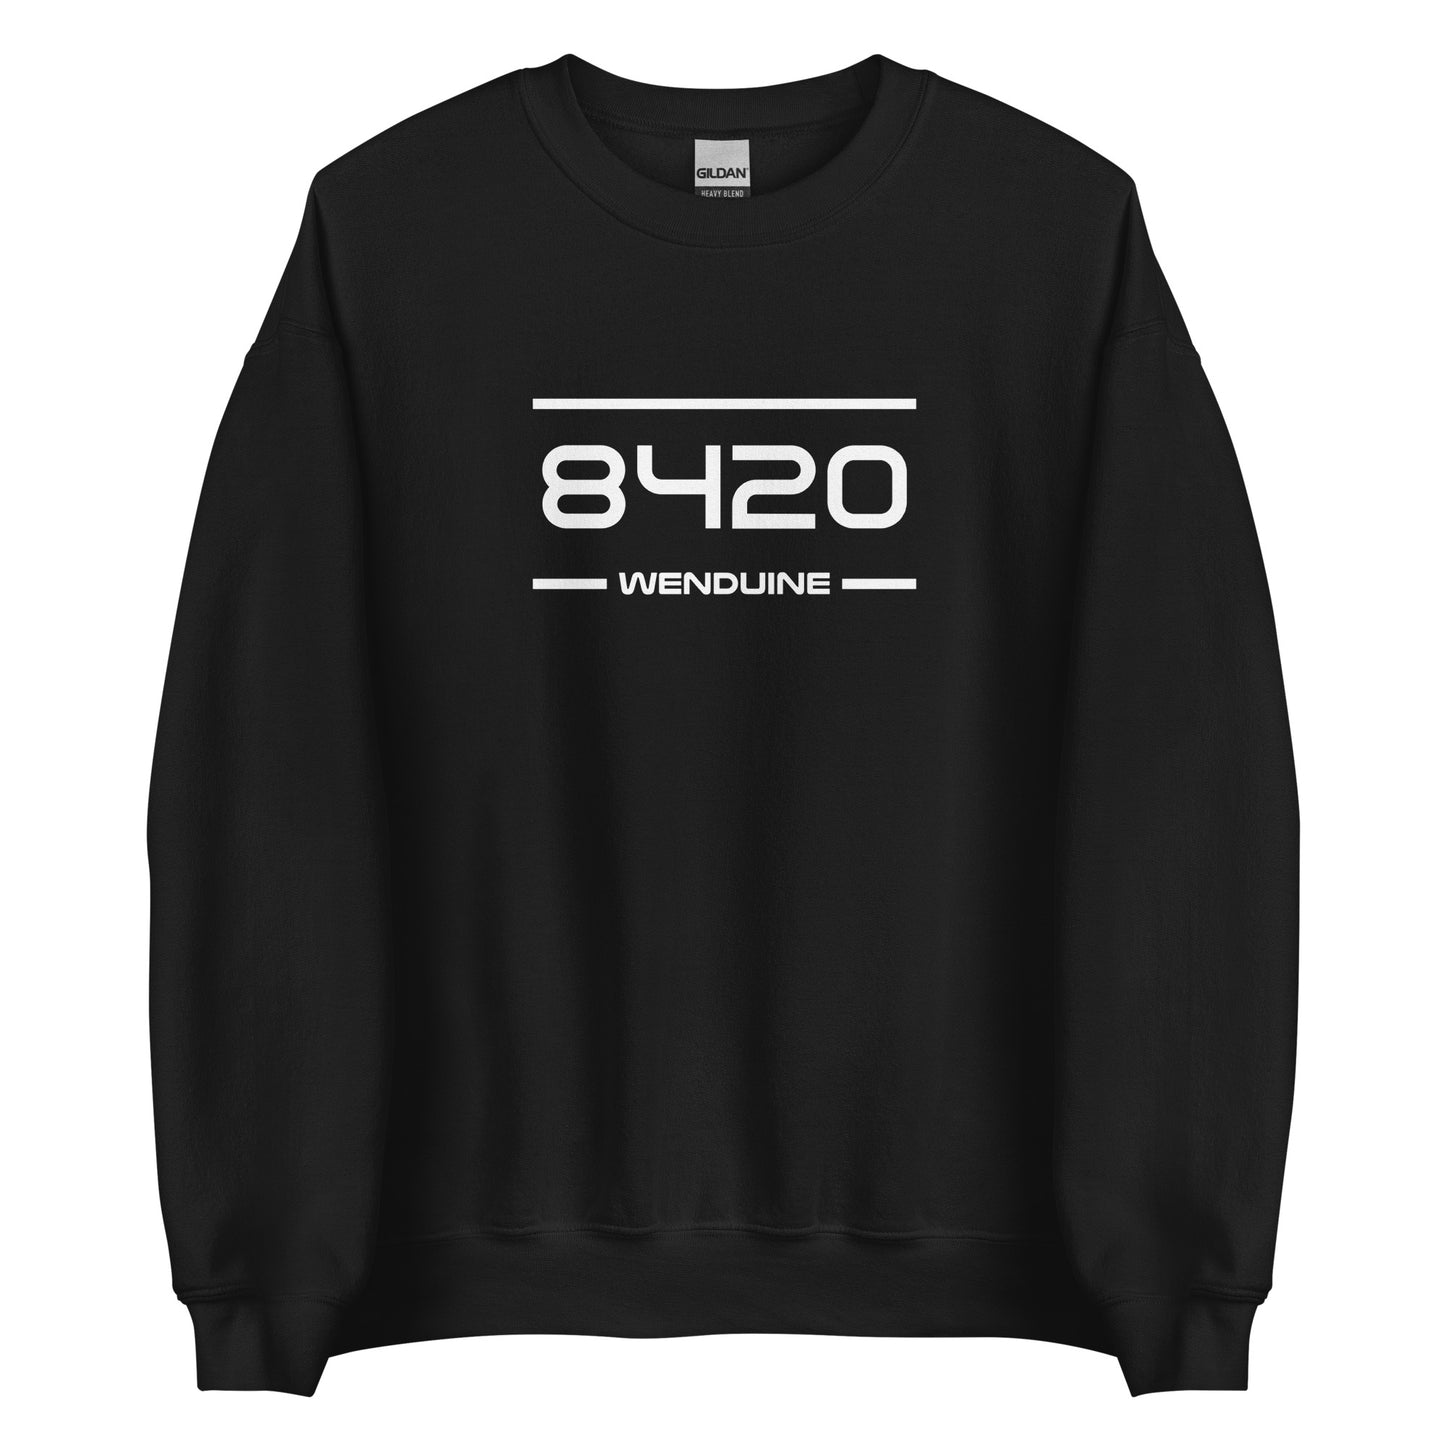 Sweater - 8420 - Wenduine (M/V)